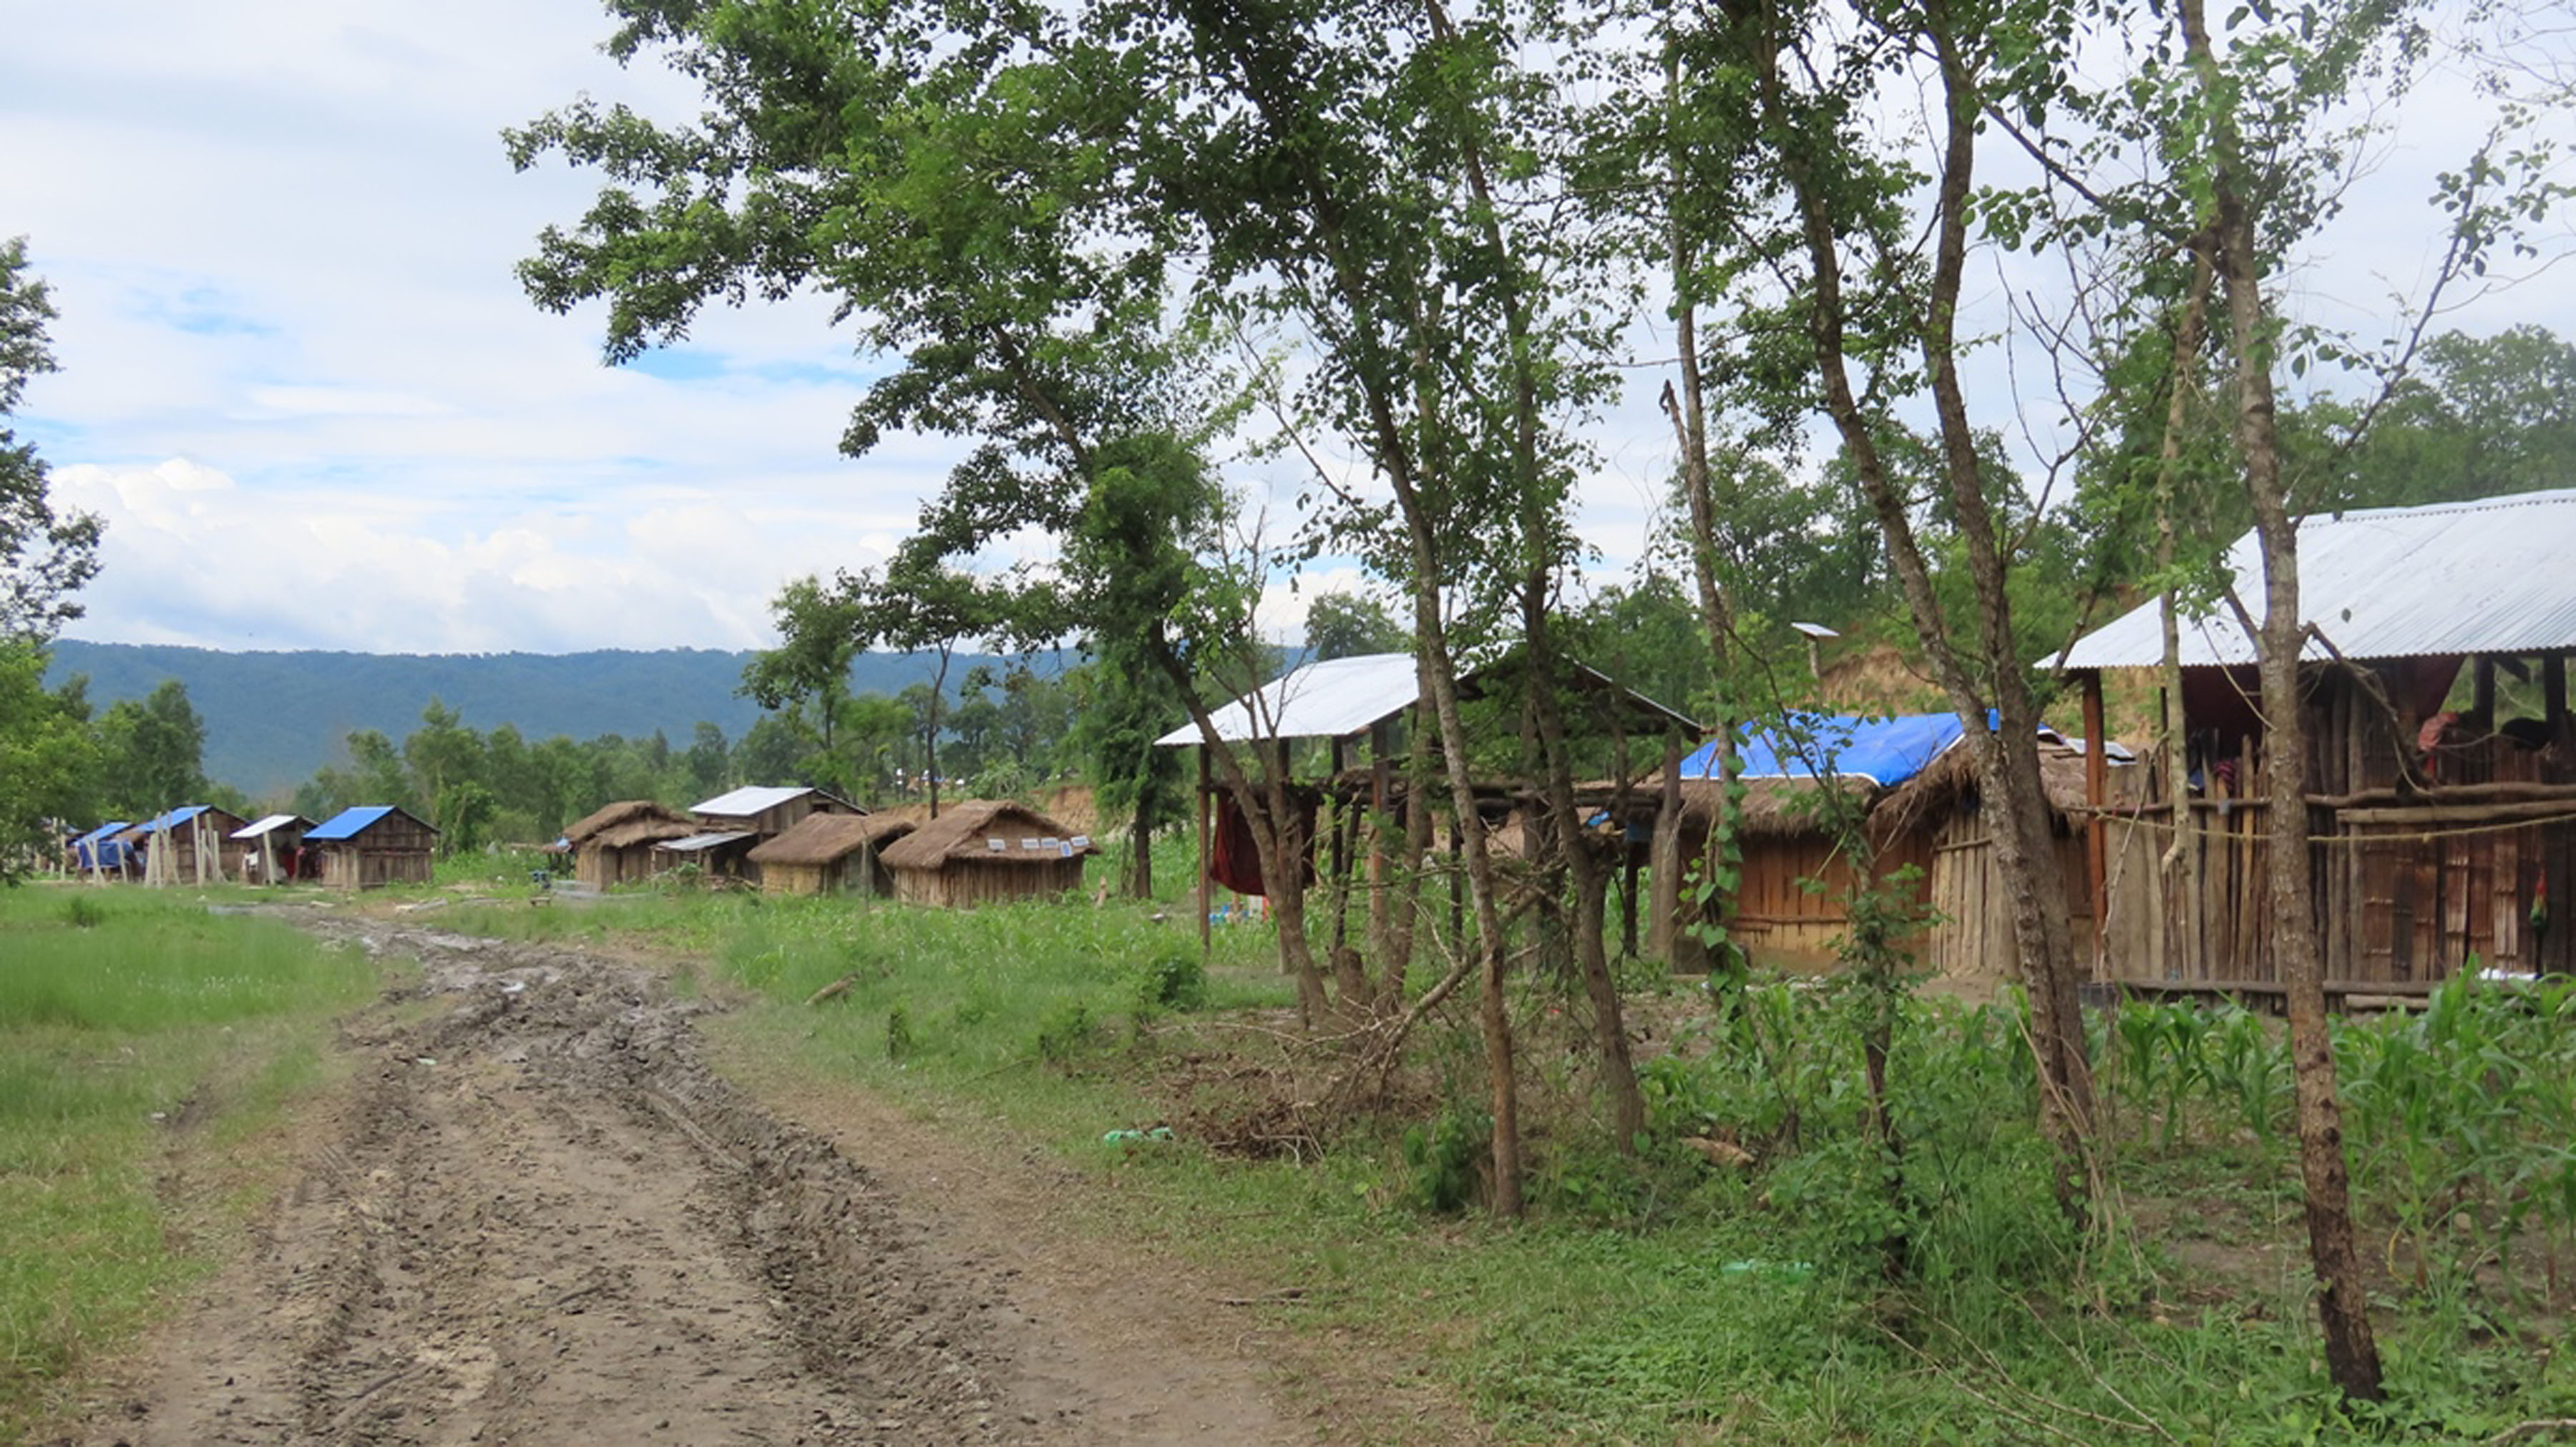 चेपाङ गाउँमा कृषि एम्बुलेन्सले ल्याएको परिवर्तन